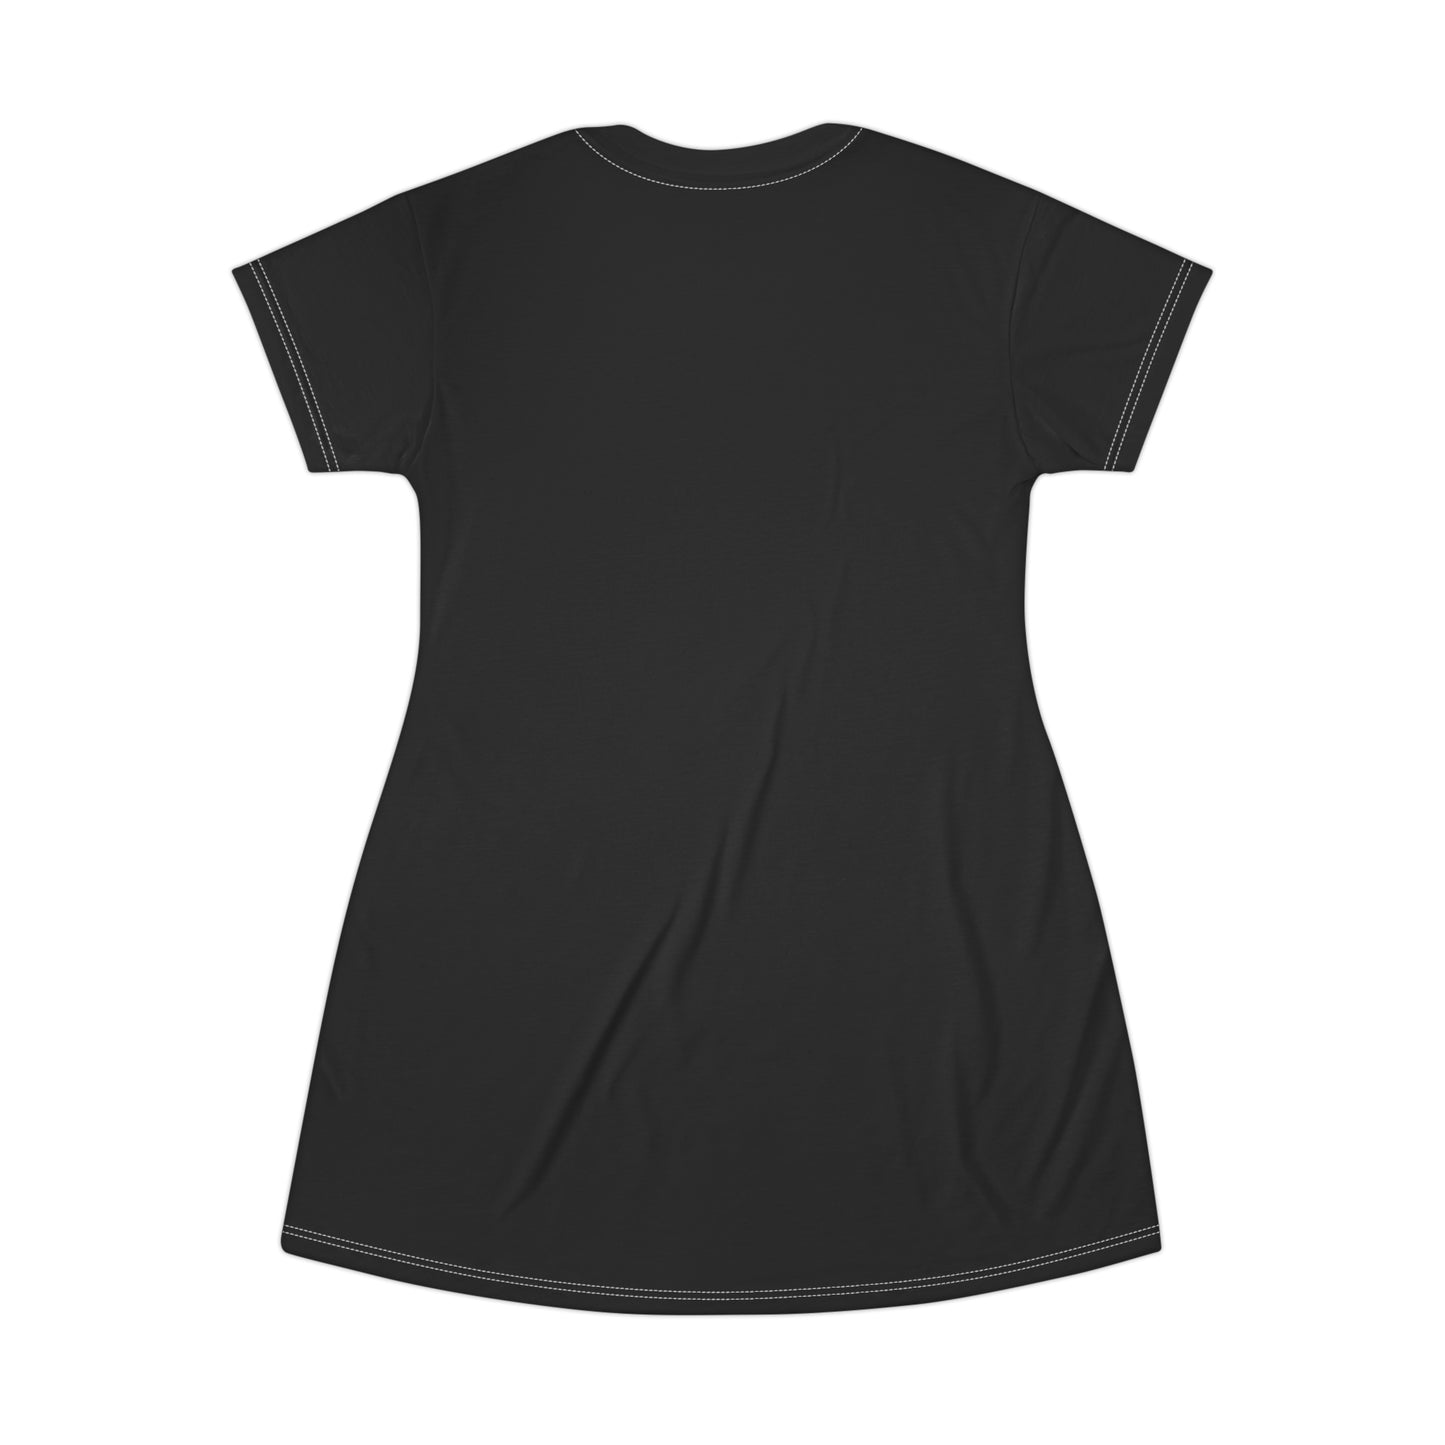 Dress-tination Fabulous- Vibes T-Shirt Dress